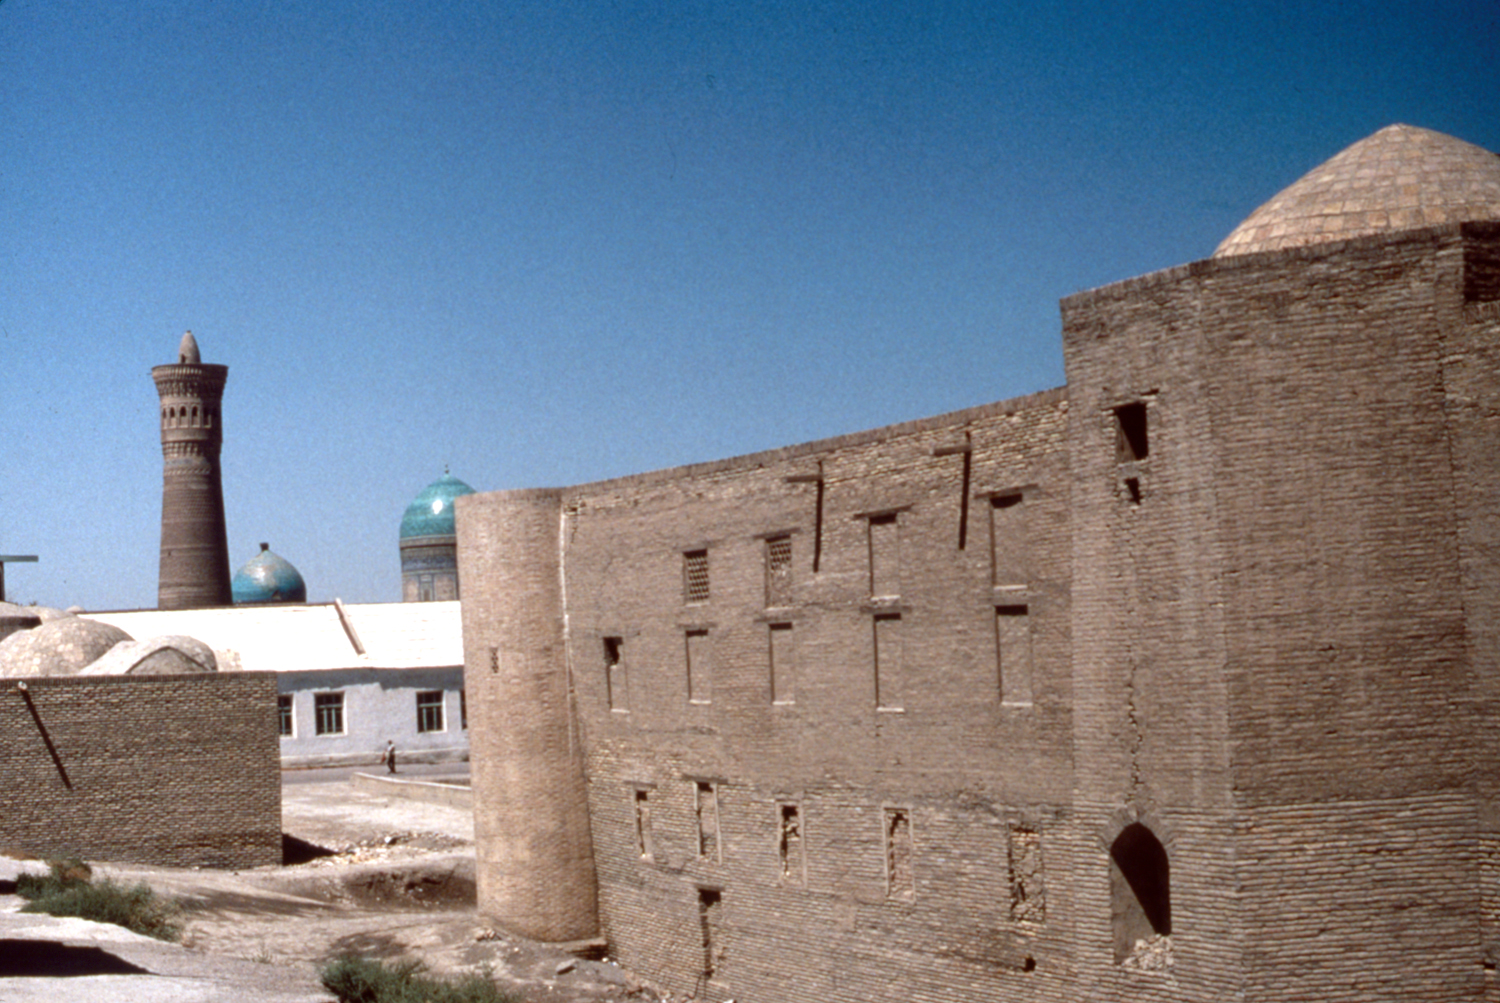 Abdullaxon Timi - Exterior view along side facade, with Kalyan minaret in background